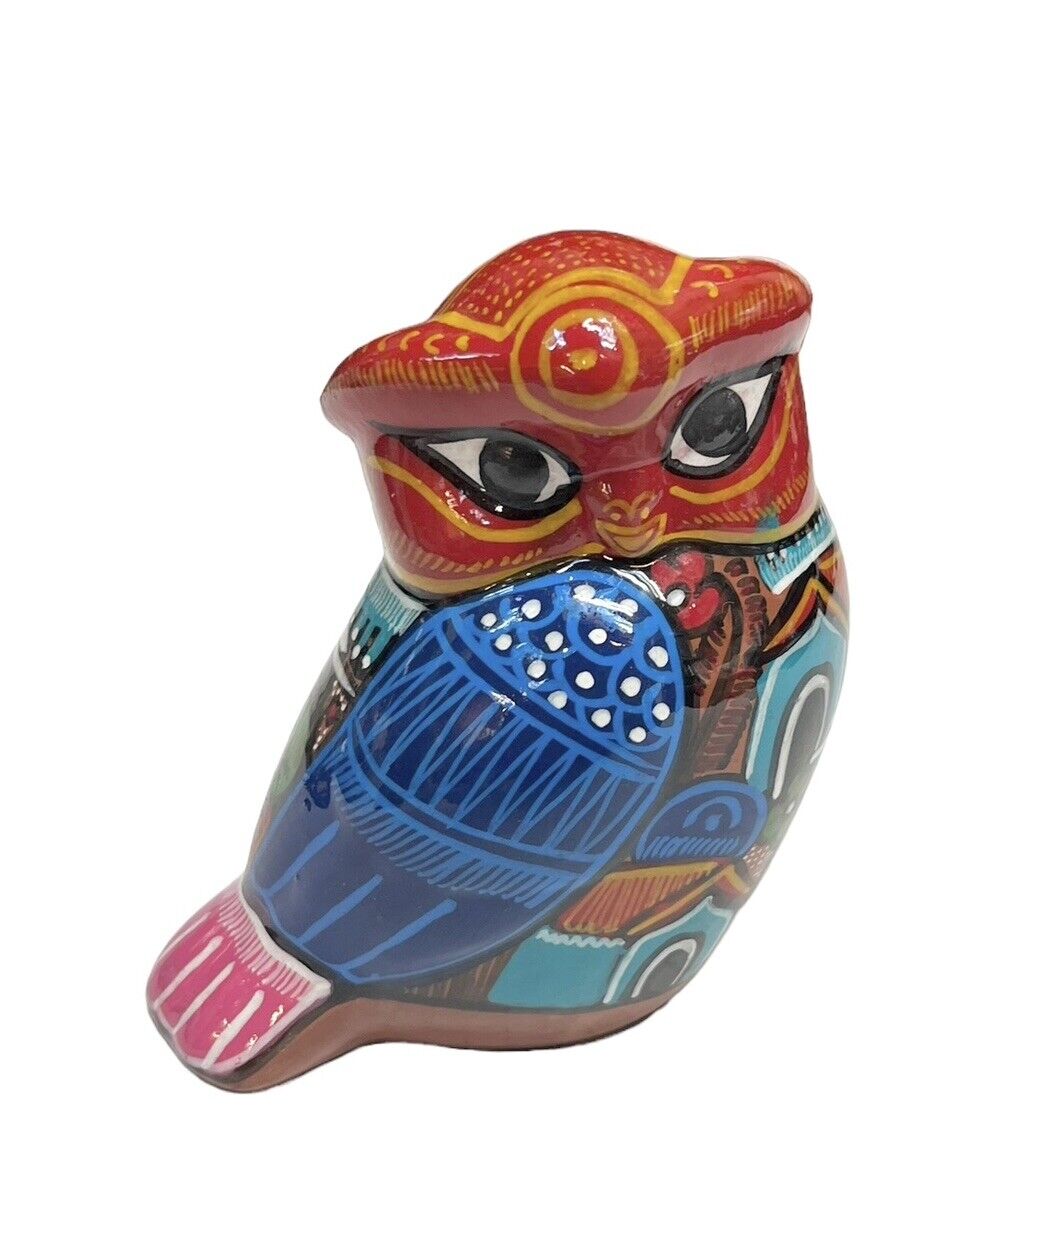 Mexican Folk Art Owl Figurine Talavera Type Pottery Multi Color Hand Painted 5”